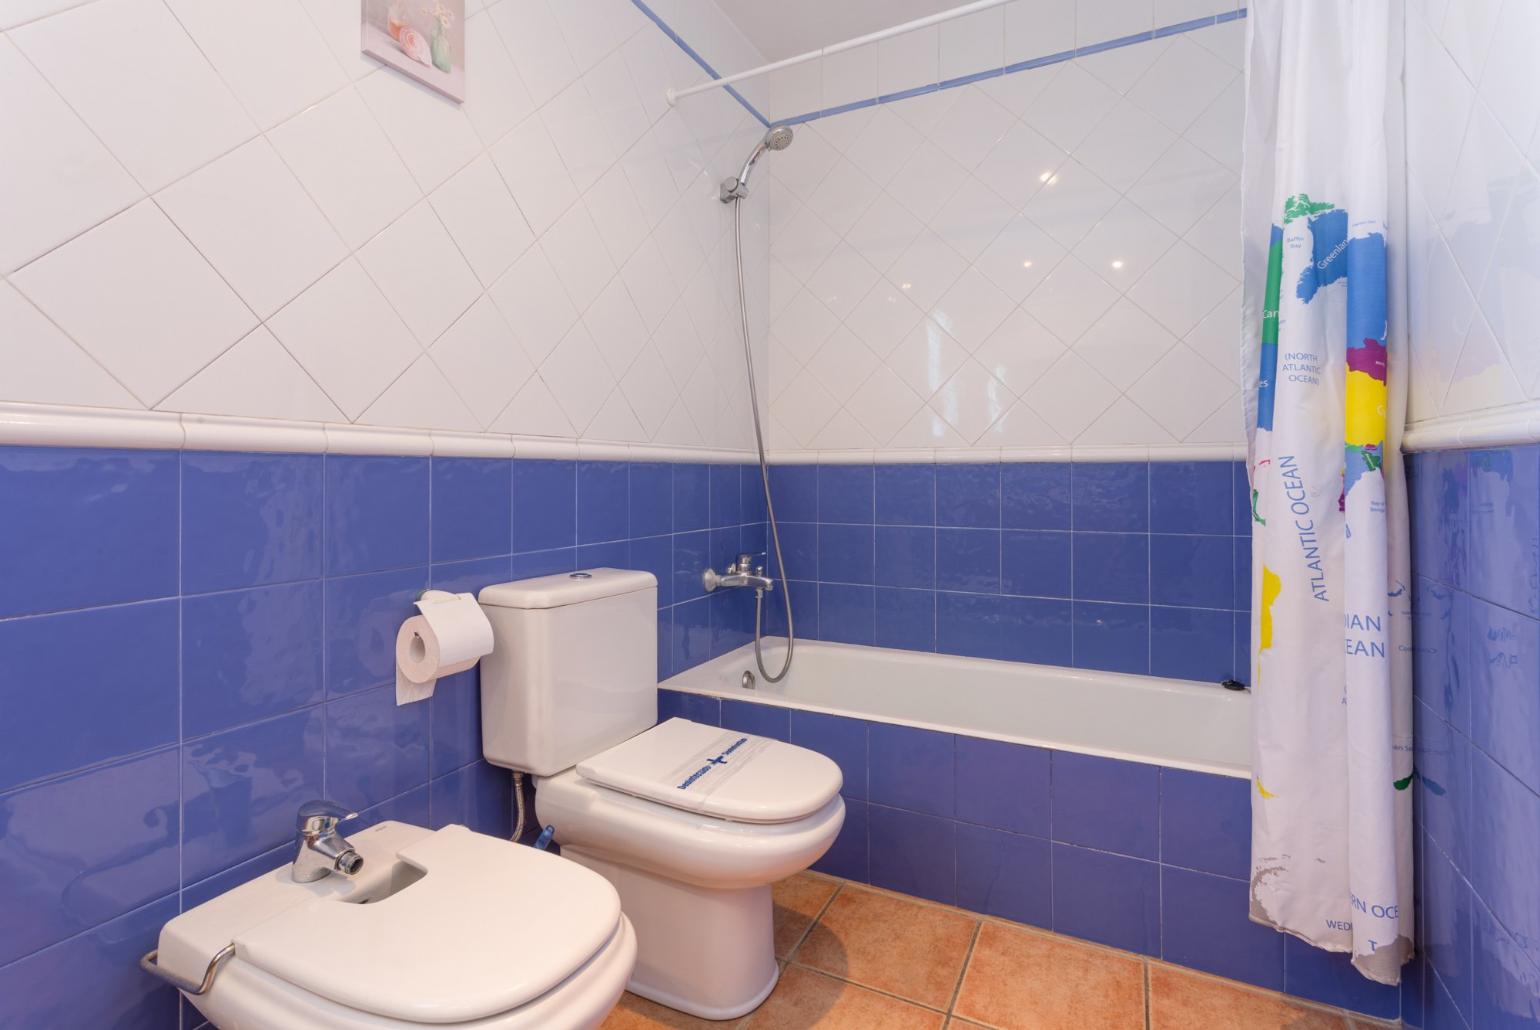 En suite bathroom with bath and overhead shower